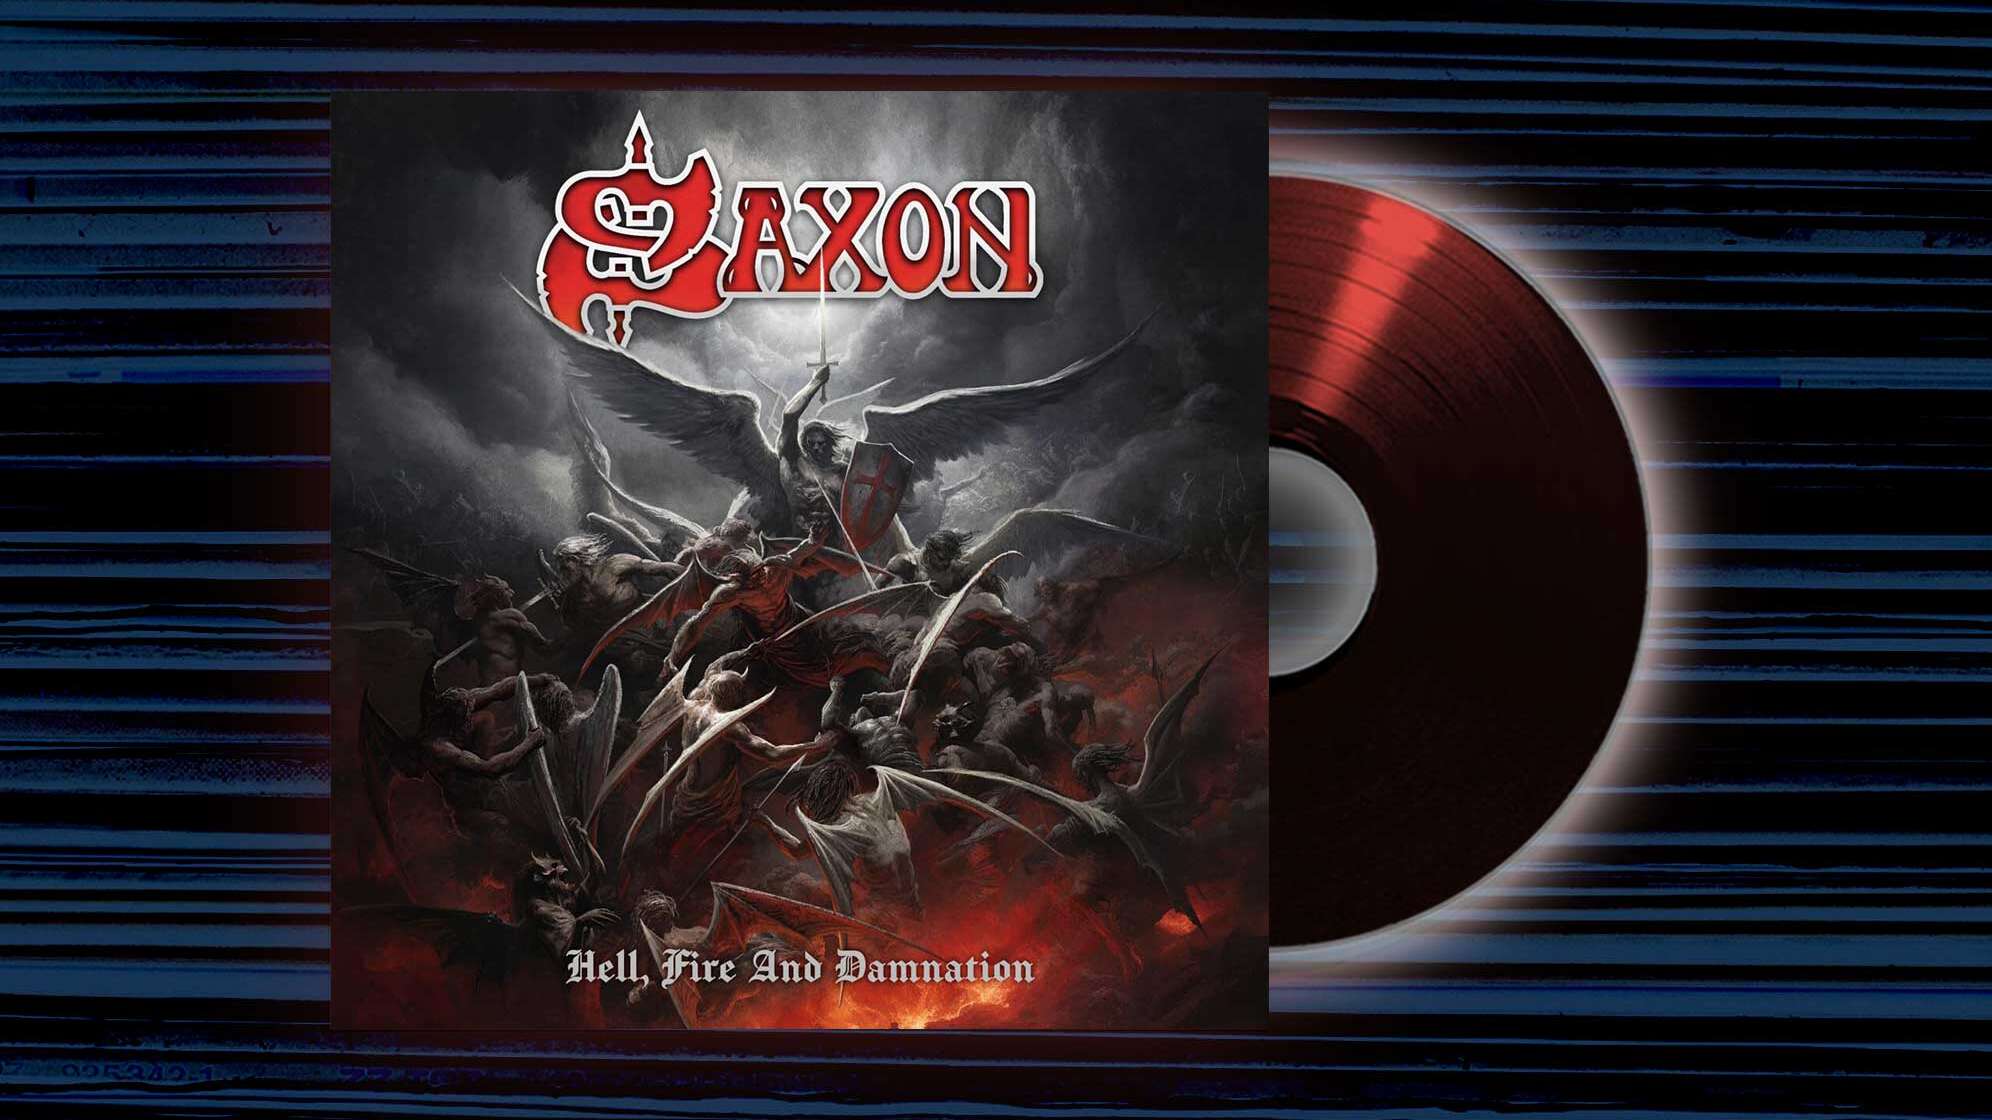 Das Cover von Saxon "Hell Fire and Damnation"